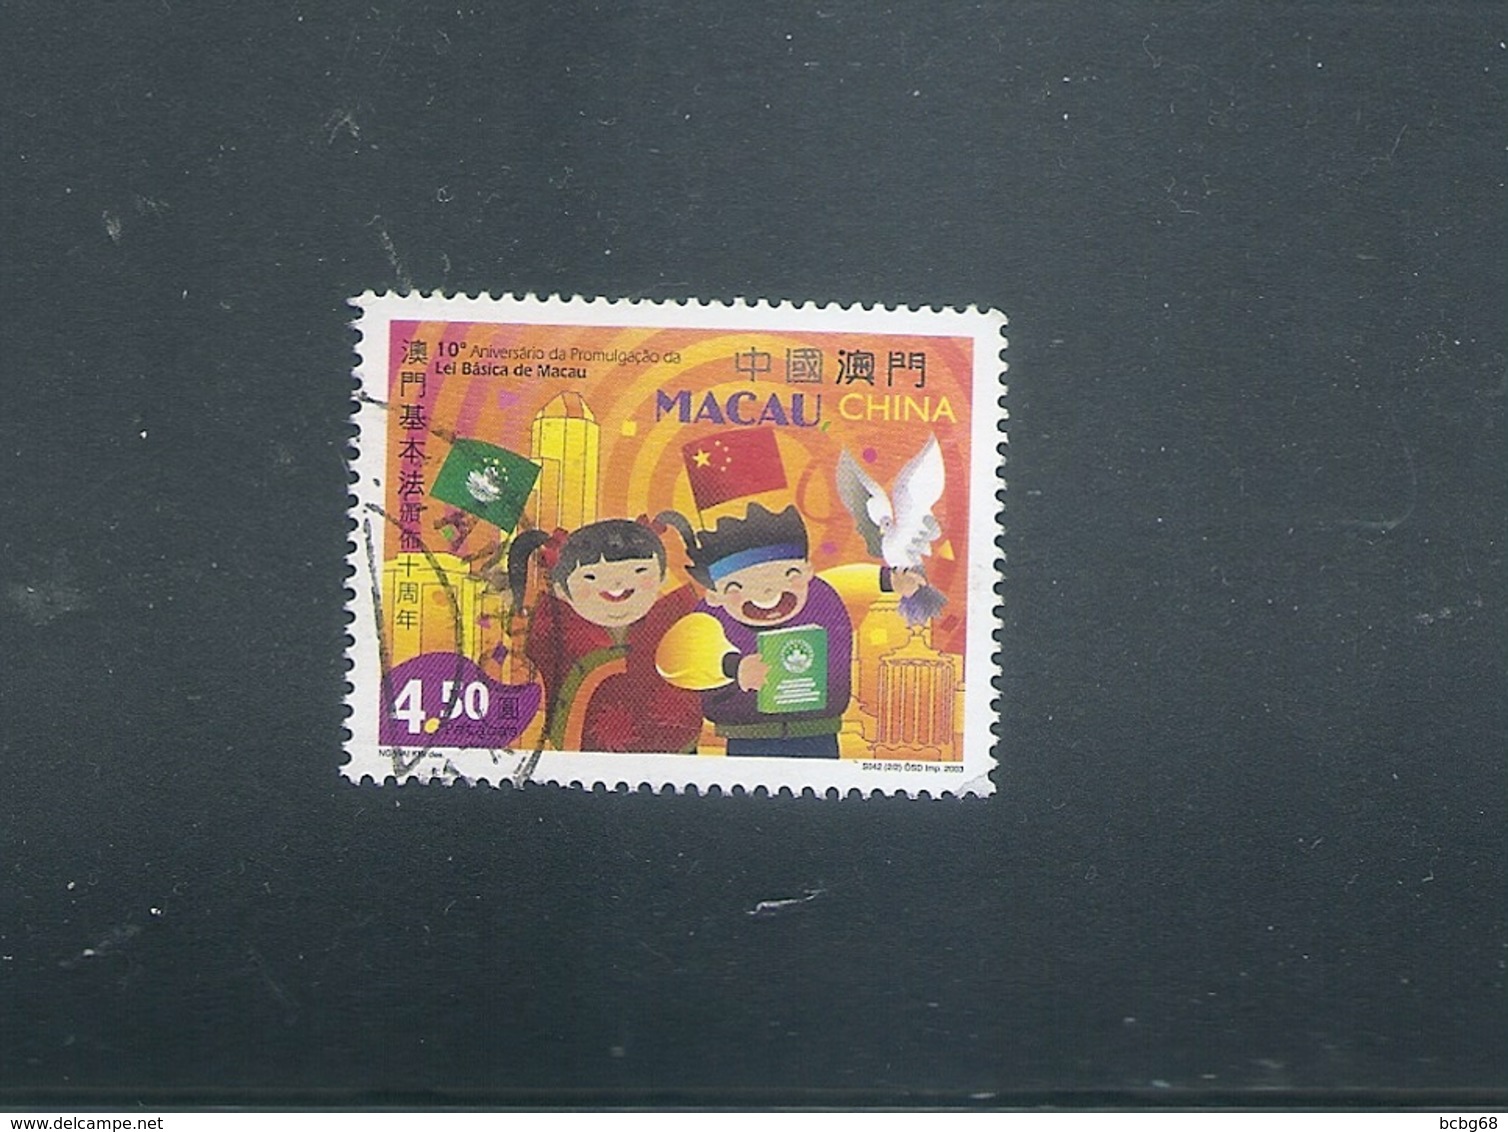 MACAU MACAO 2003 Basic Law 10th Anniversary Scott 1119 SG 1347 Fine Used - Used Stamps